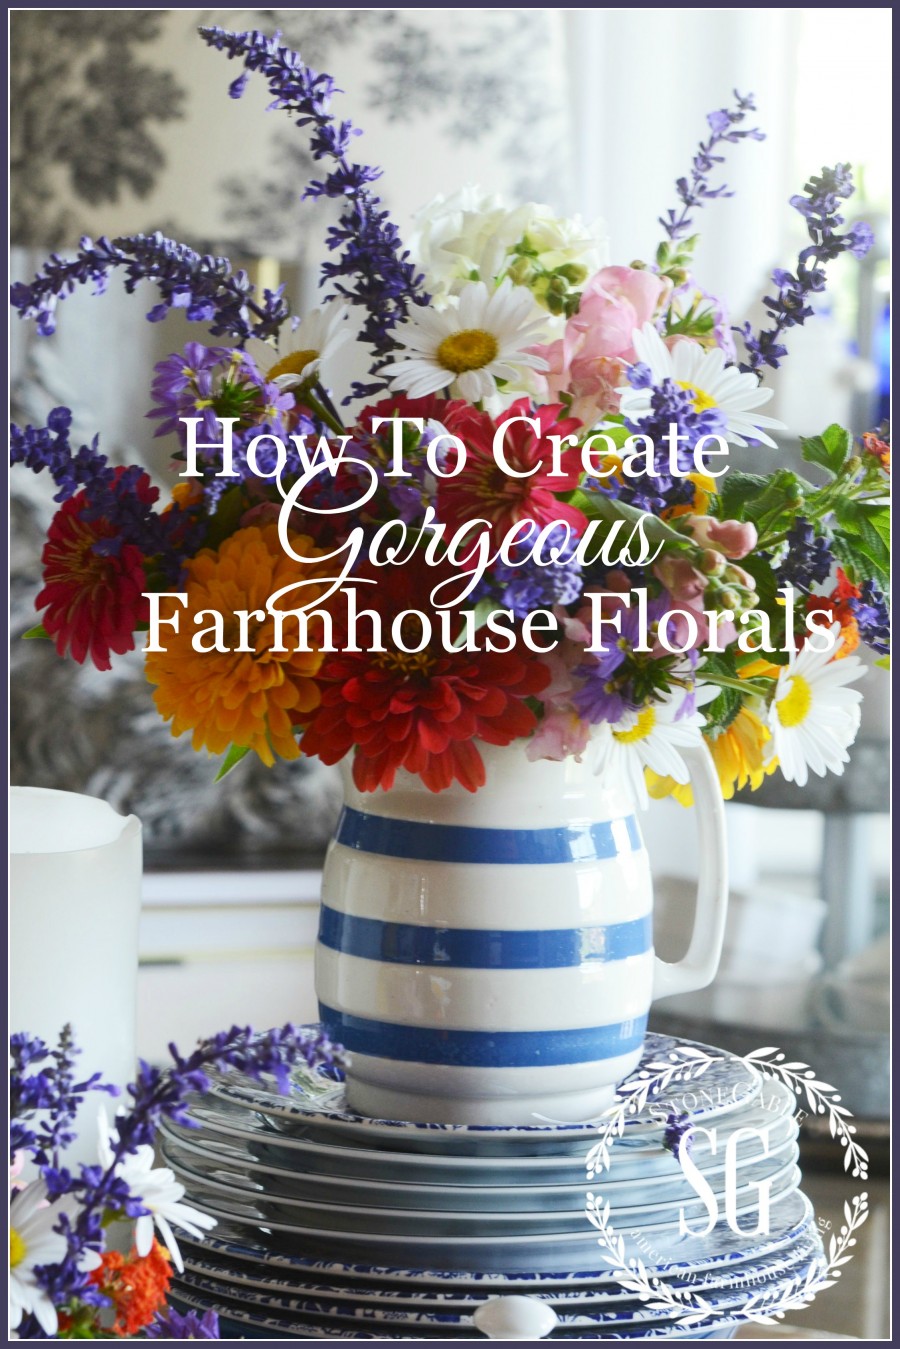 HOW TO CREATE GORGEOUS FARMHOUSE FLORALS